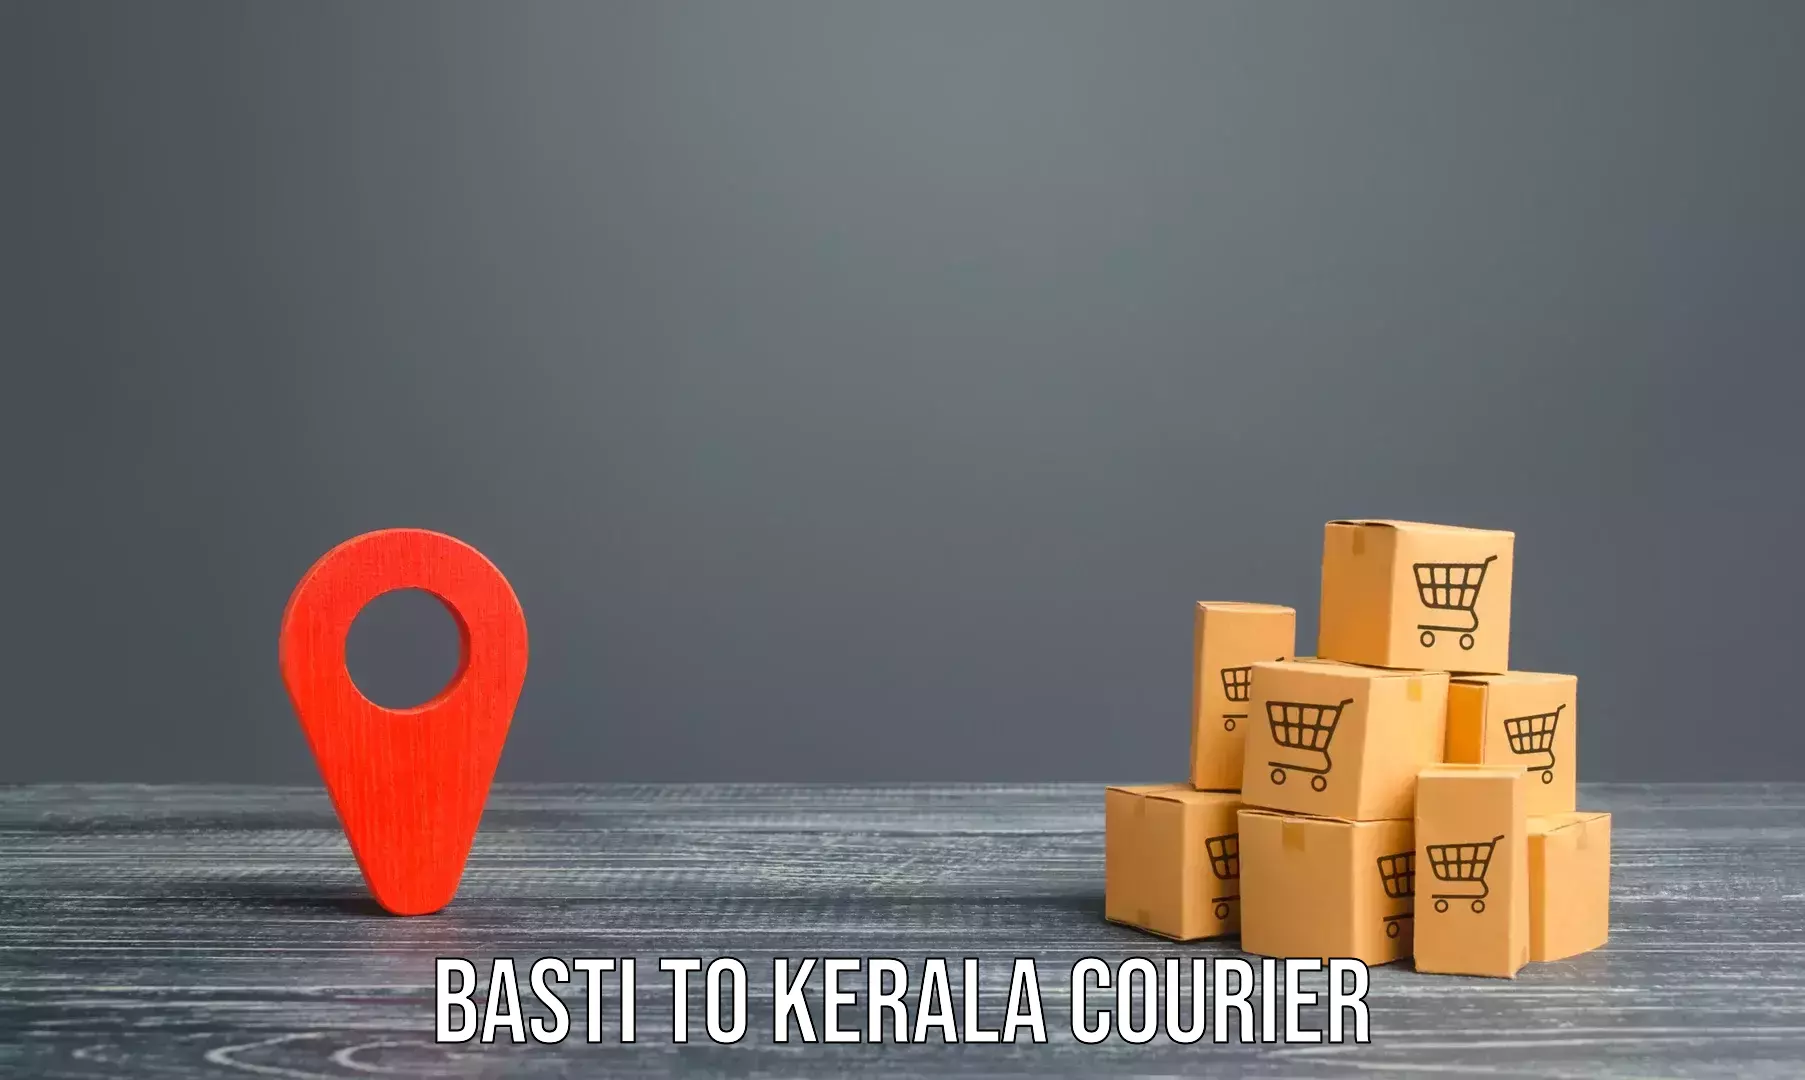 Home relocation experts Basti to Kerala